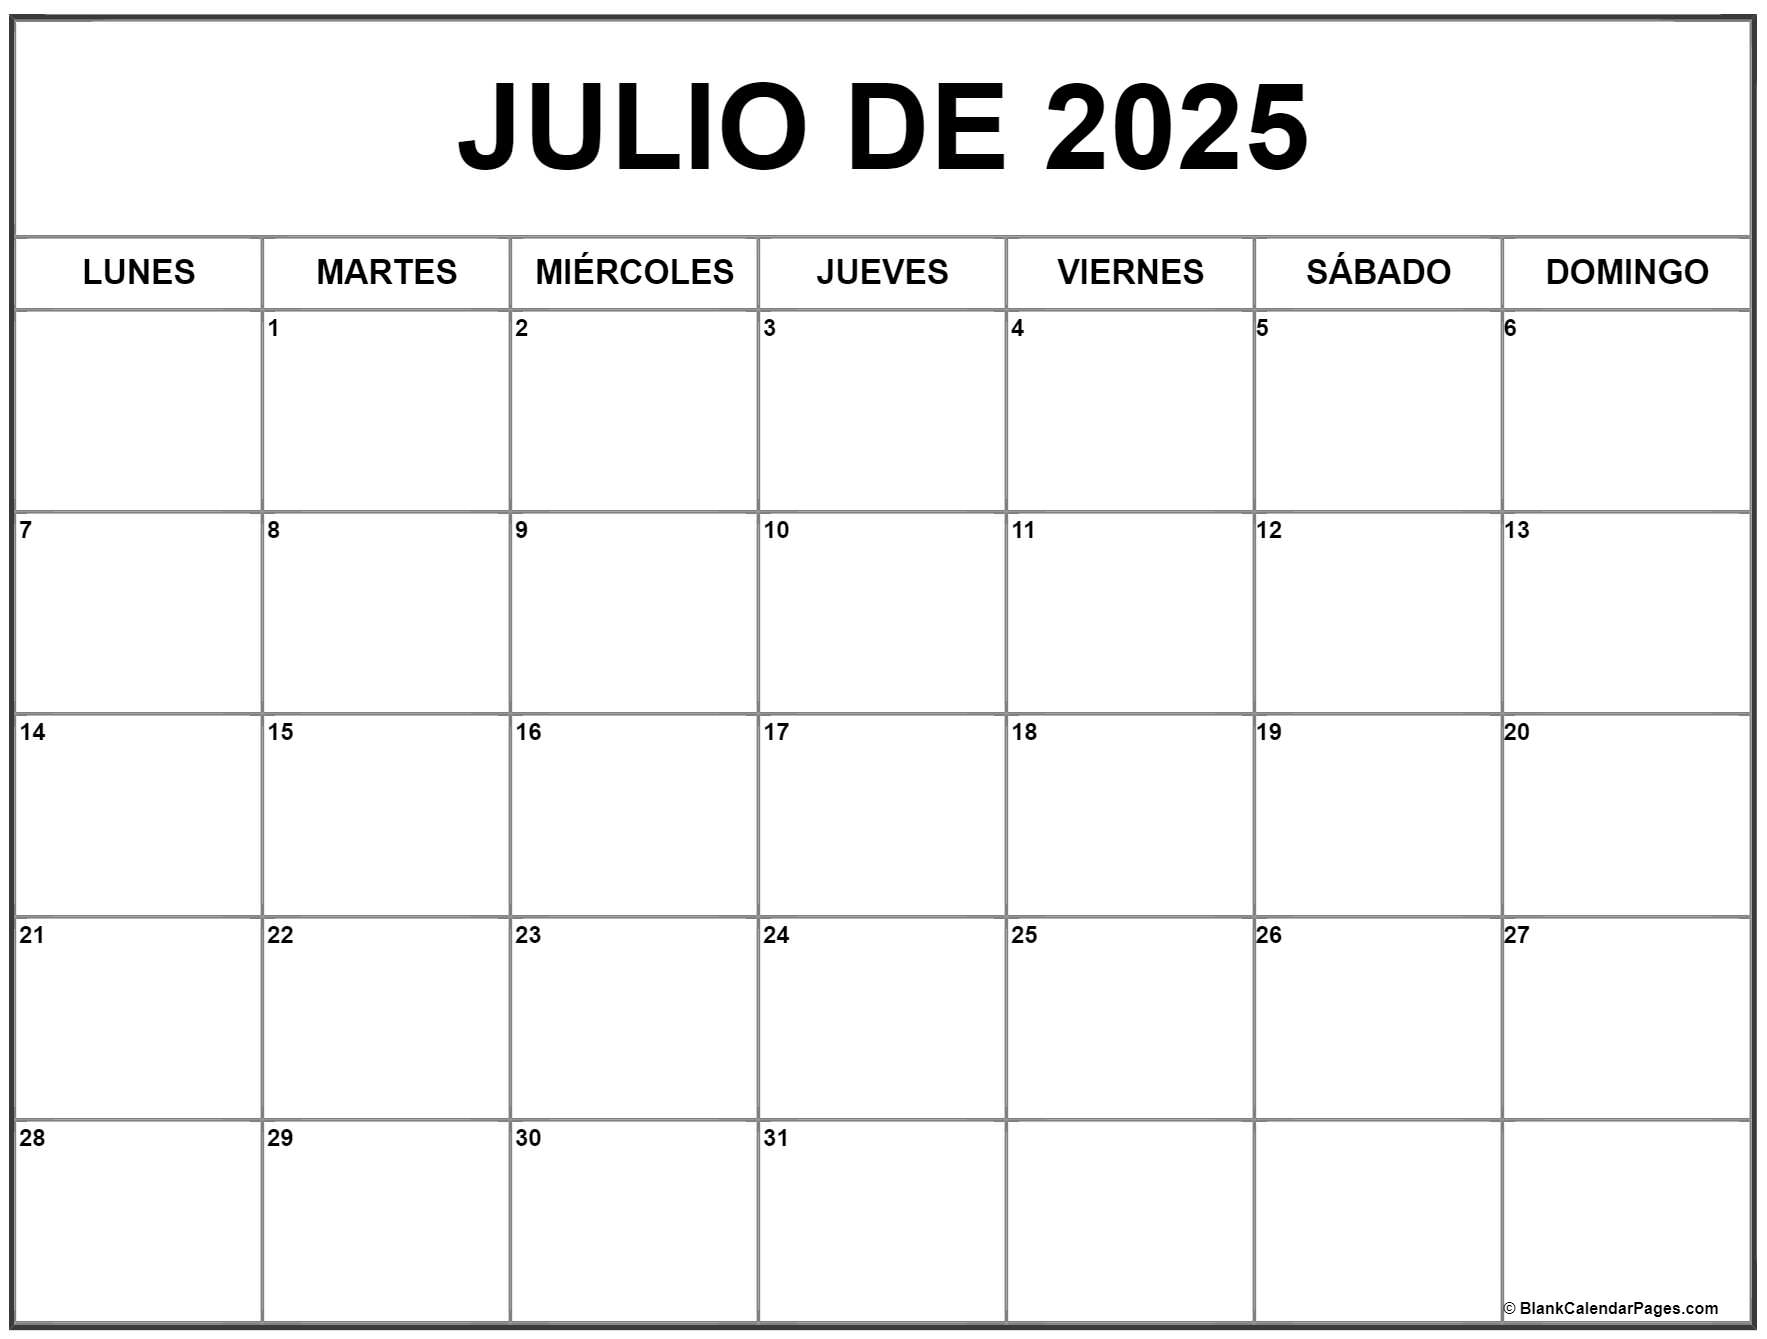 julio de 2025 calendario gratis Calendario julio